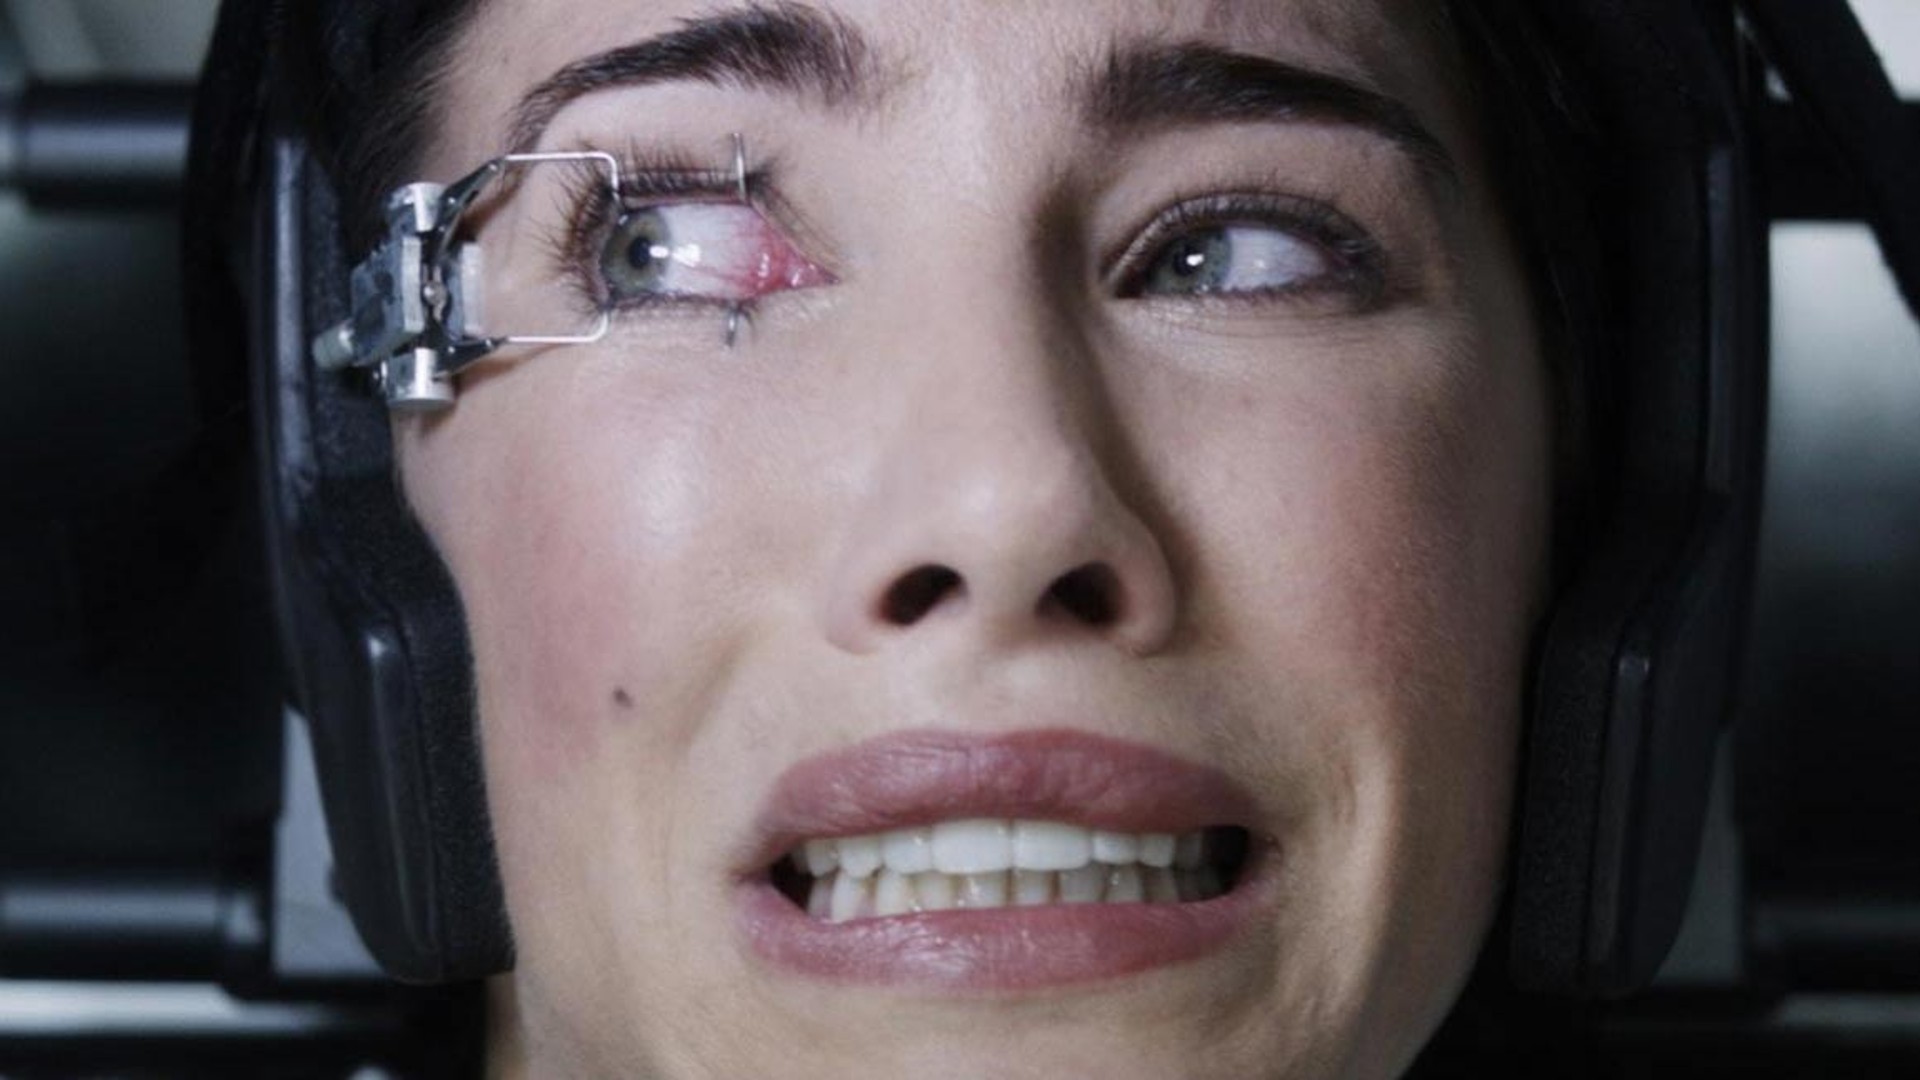 Jacqueline MacInnes Wood looks terrified waiting for laser oculus surgery.